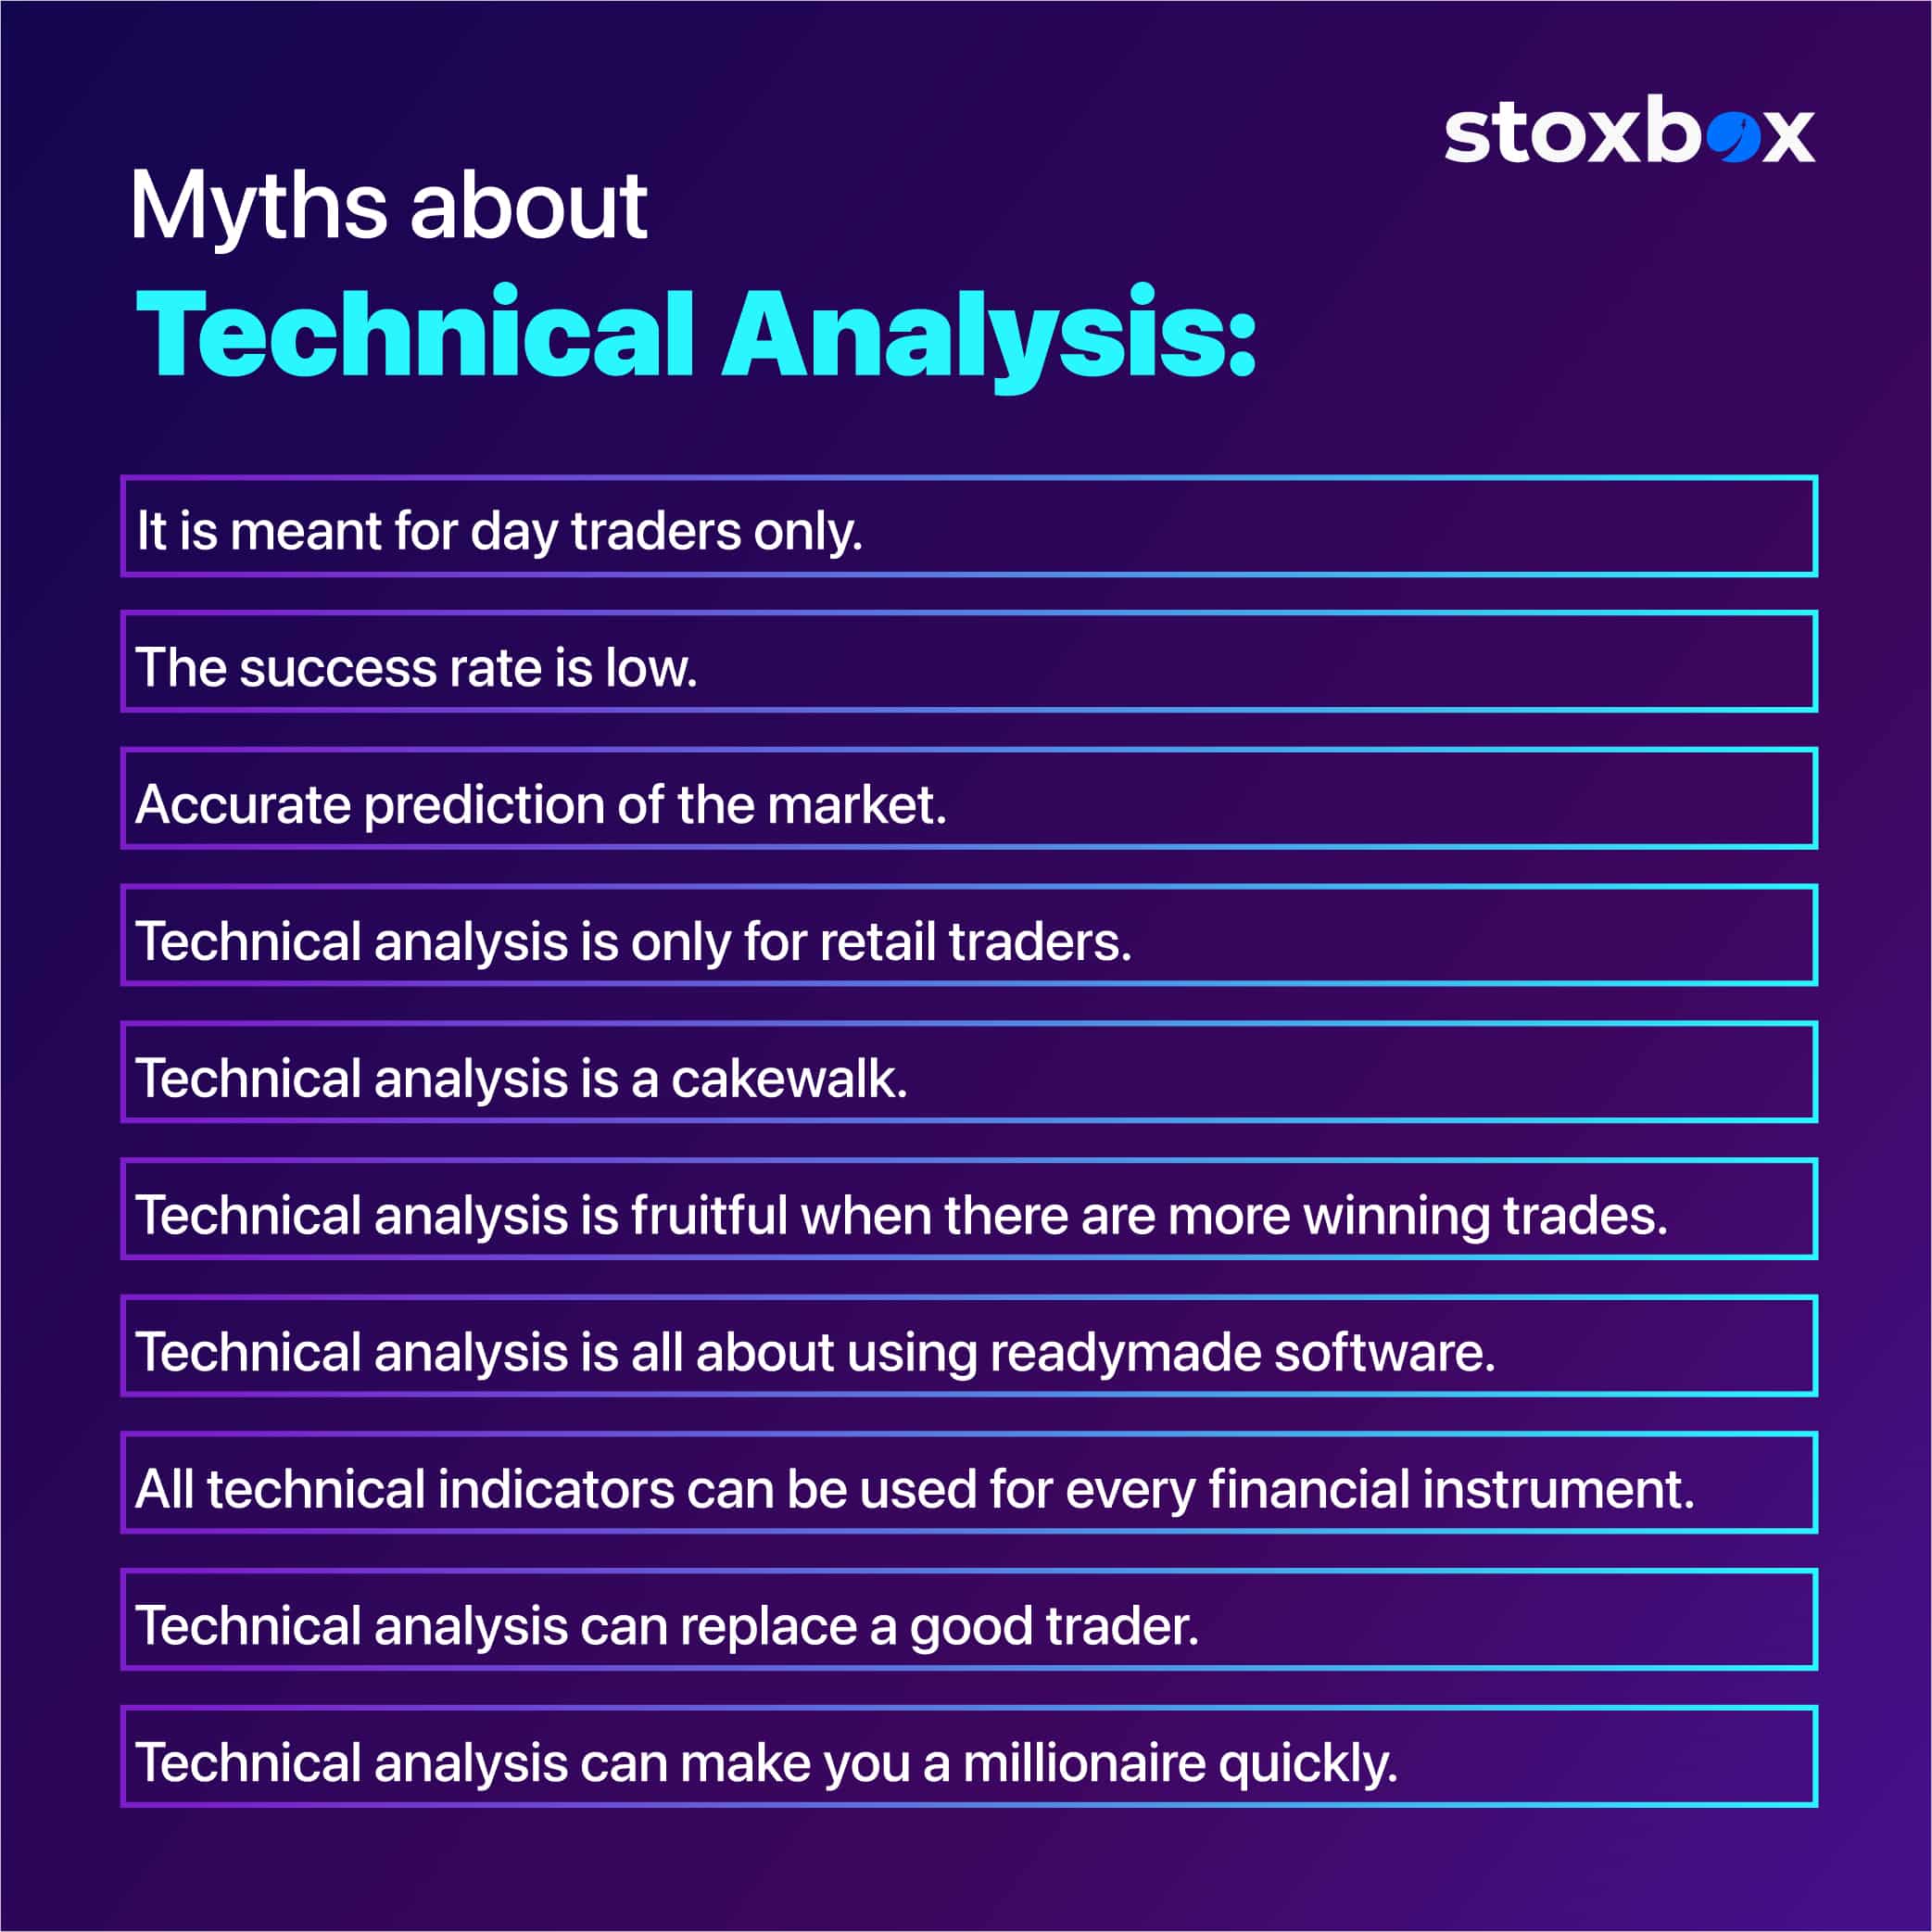 10 Big Myths Behind Technical Analysis